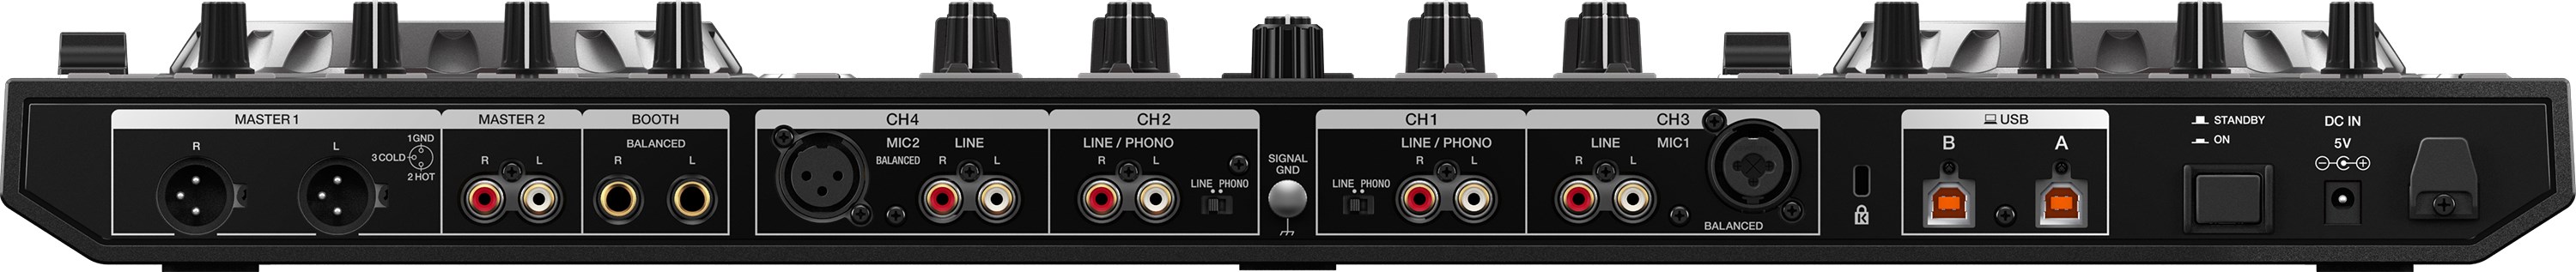 Pioneer Dj Ddj-sx3 - USB DJ controller - Variation 3